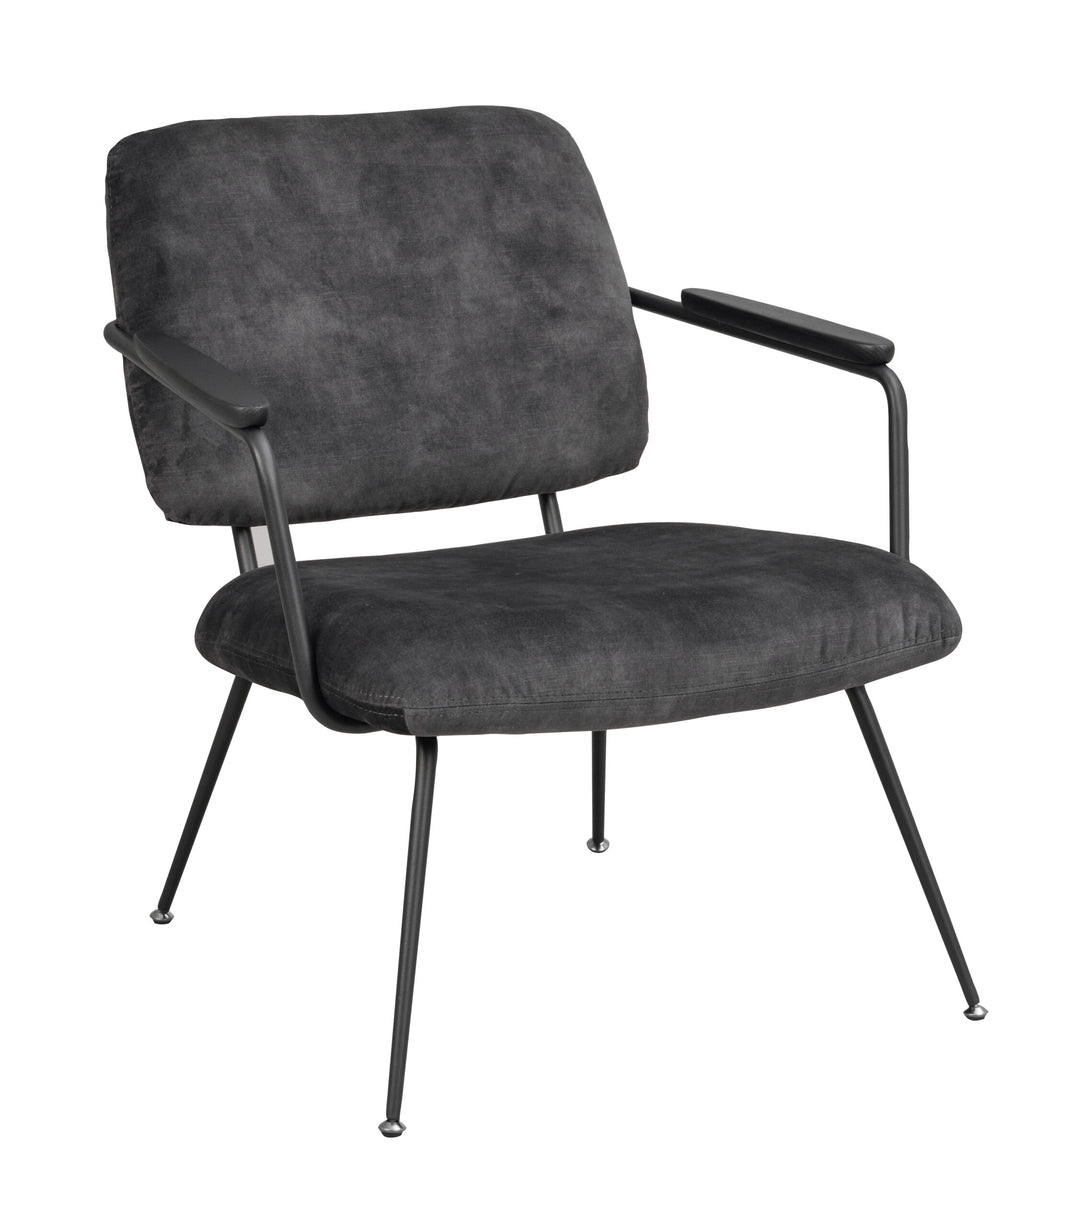 120112_b, Prescott lounge chair grey_black